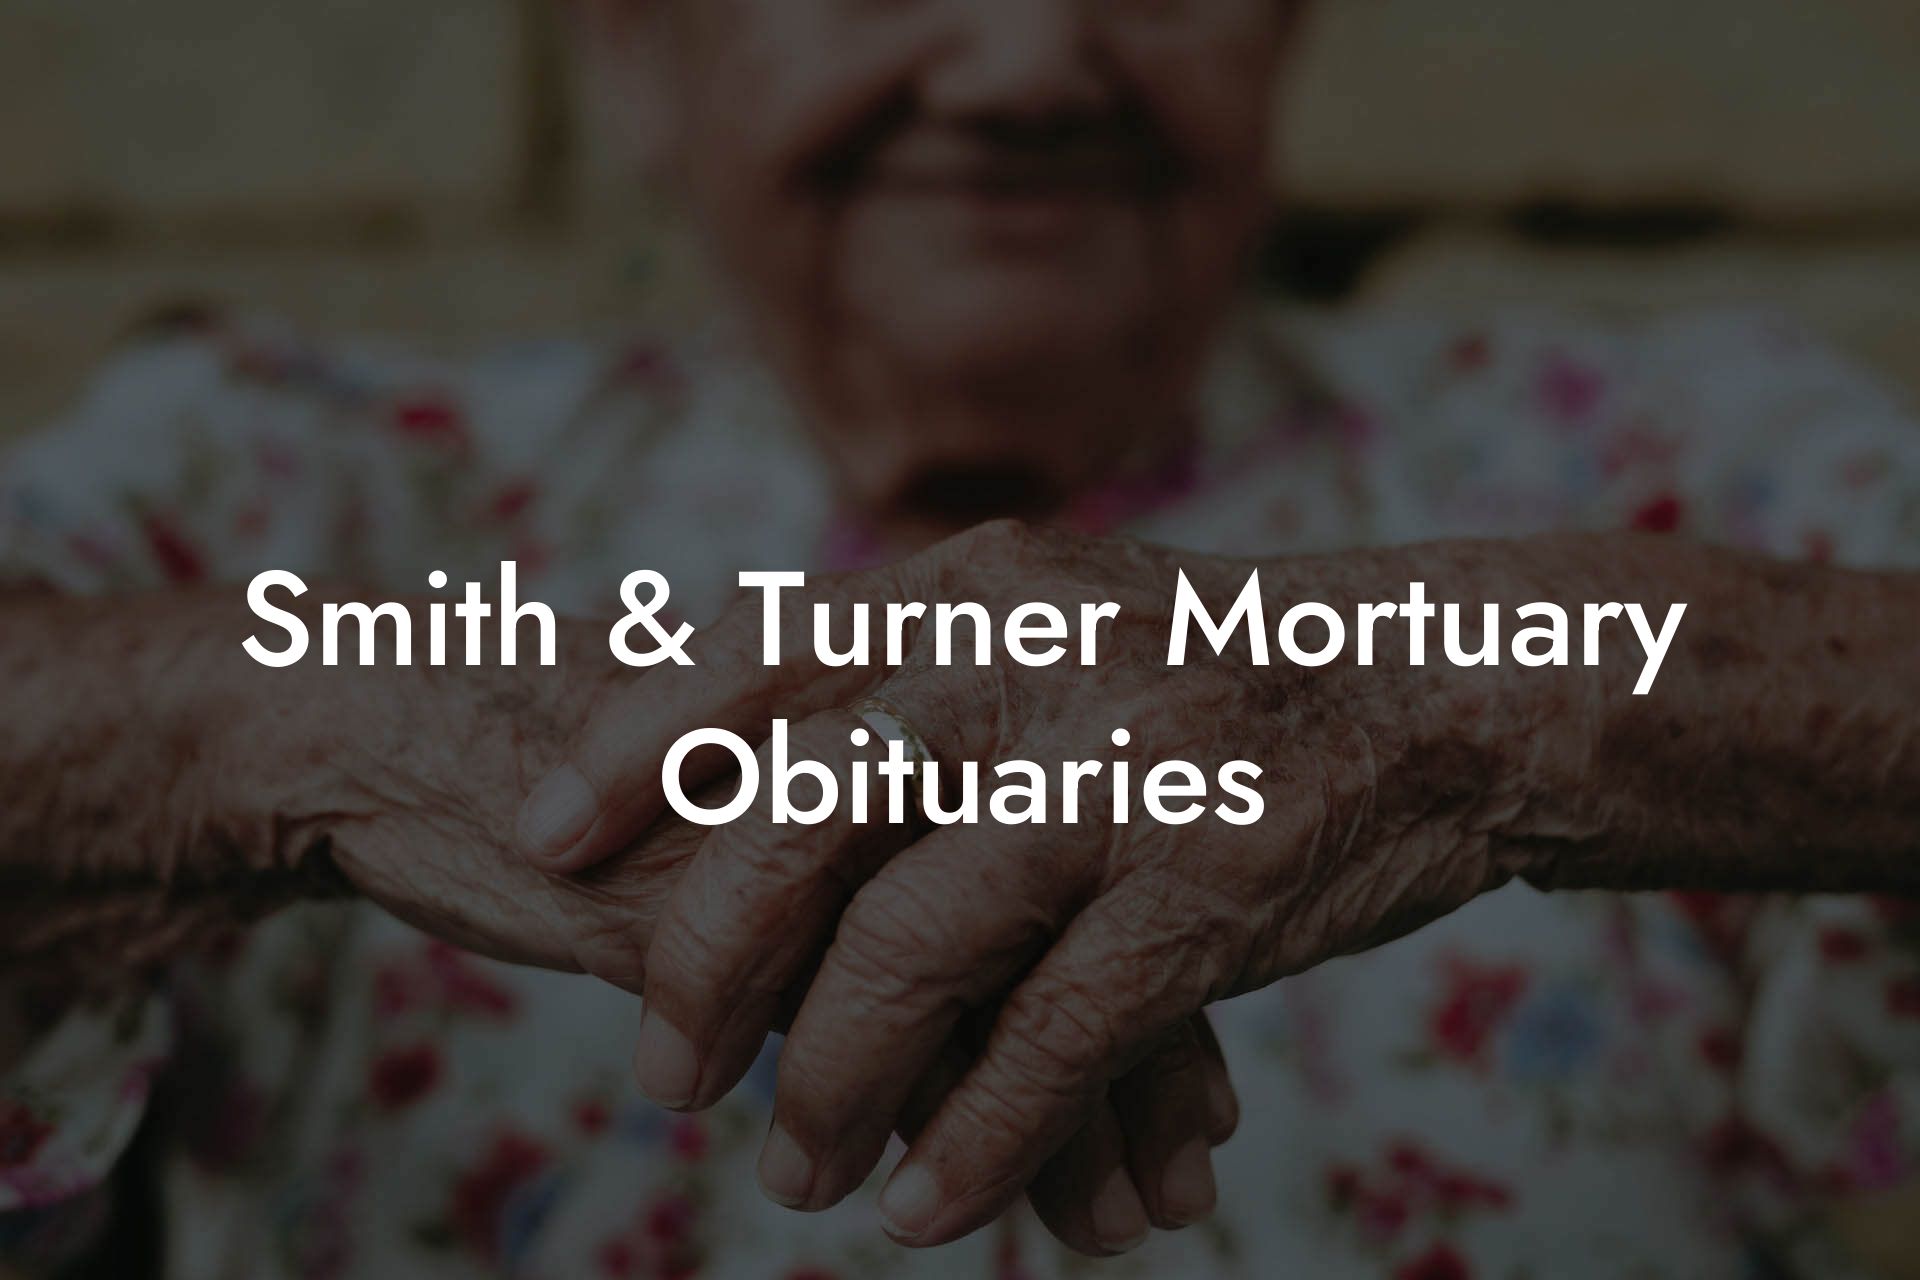 Smith & Turner Mortuary Obituaries